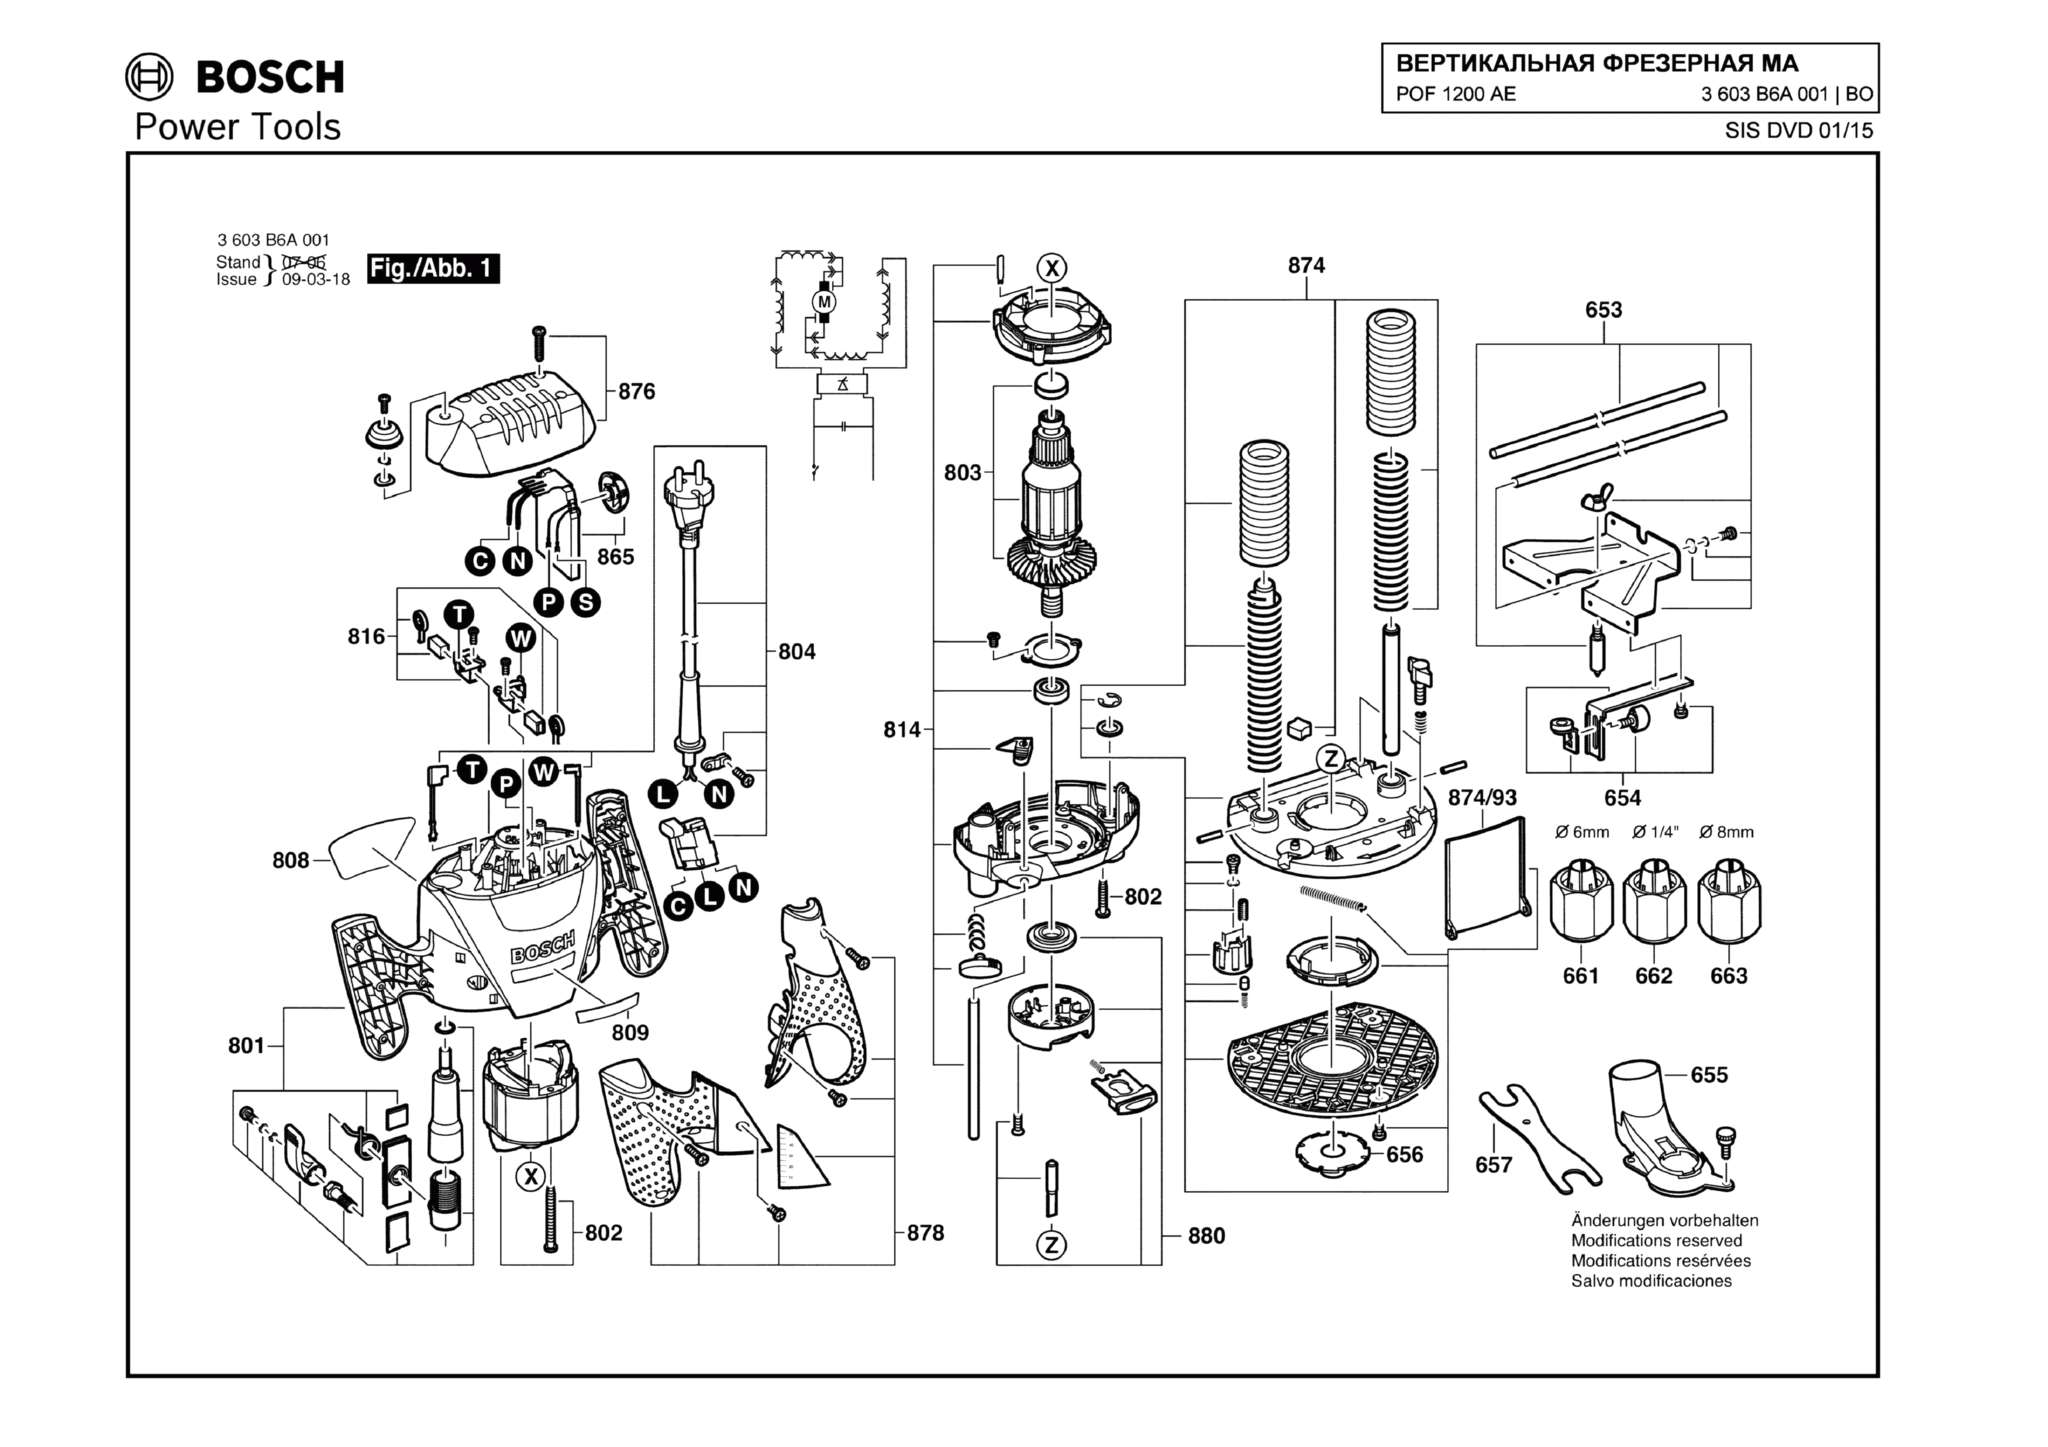 Запчасти, схема и деталировка Bosch POF 1200 AE (ТИП 3603B6A001)